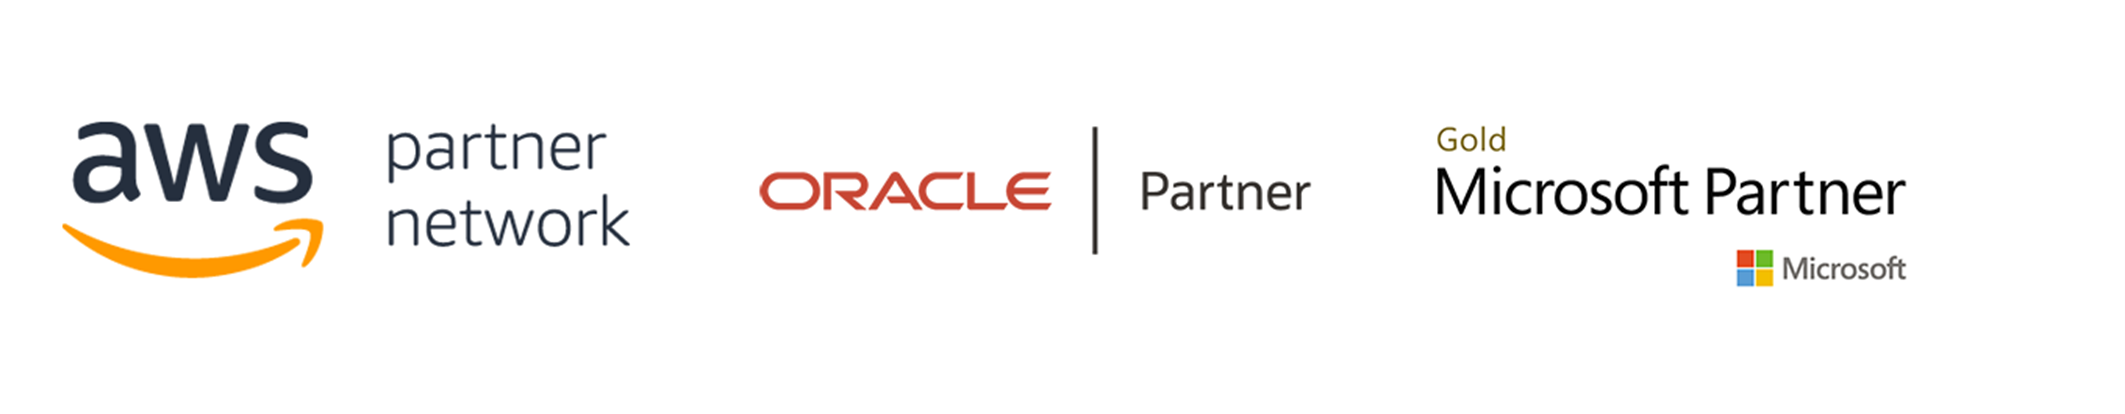 Cloud partner logos: AWS, Oracle and Microsoft